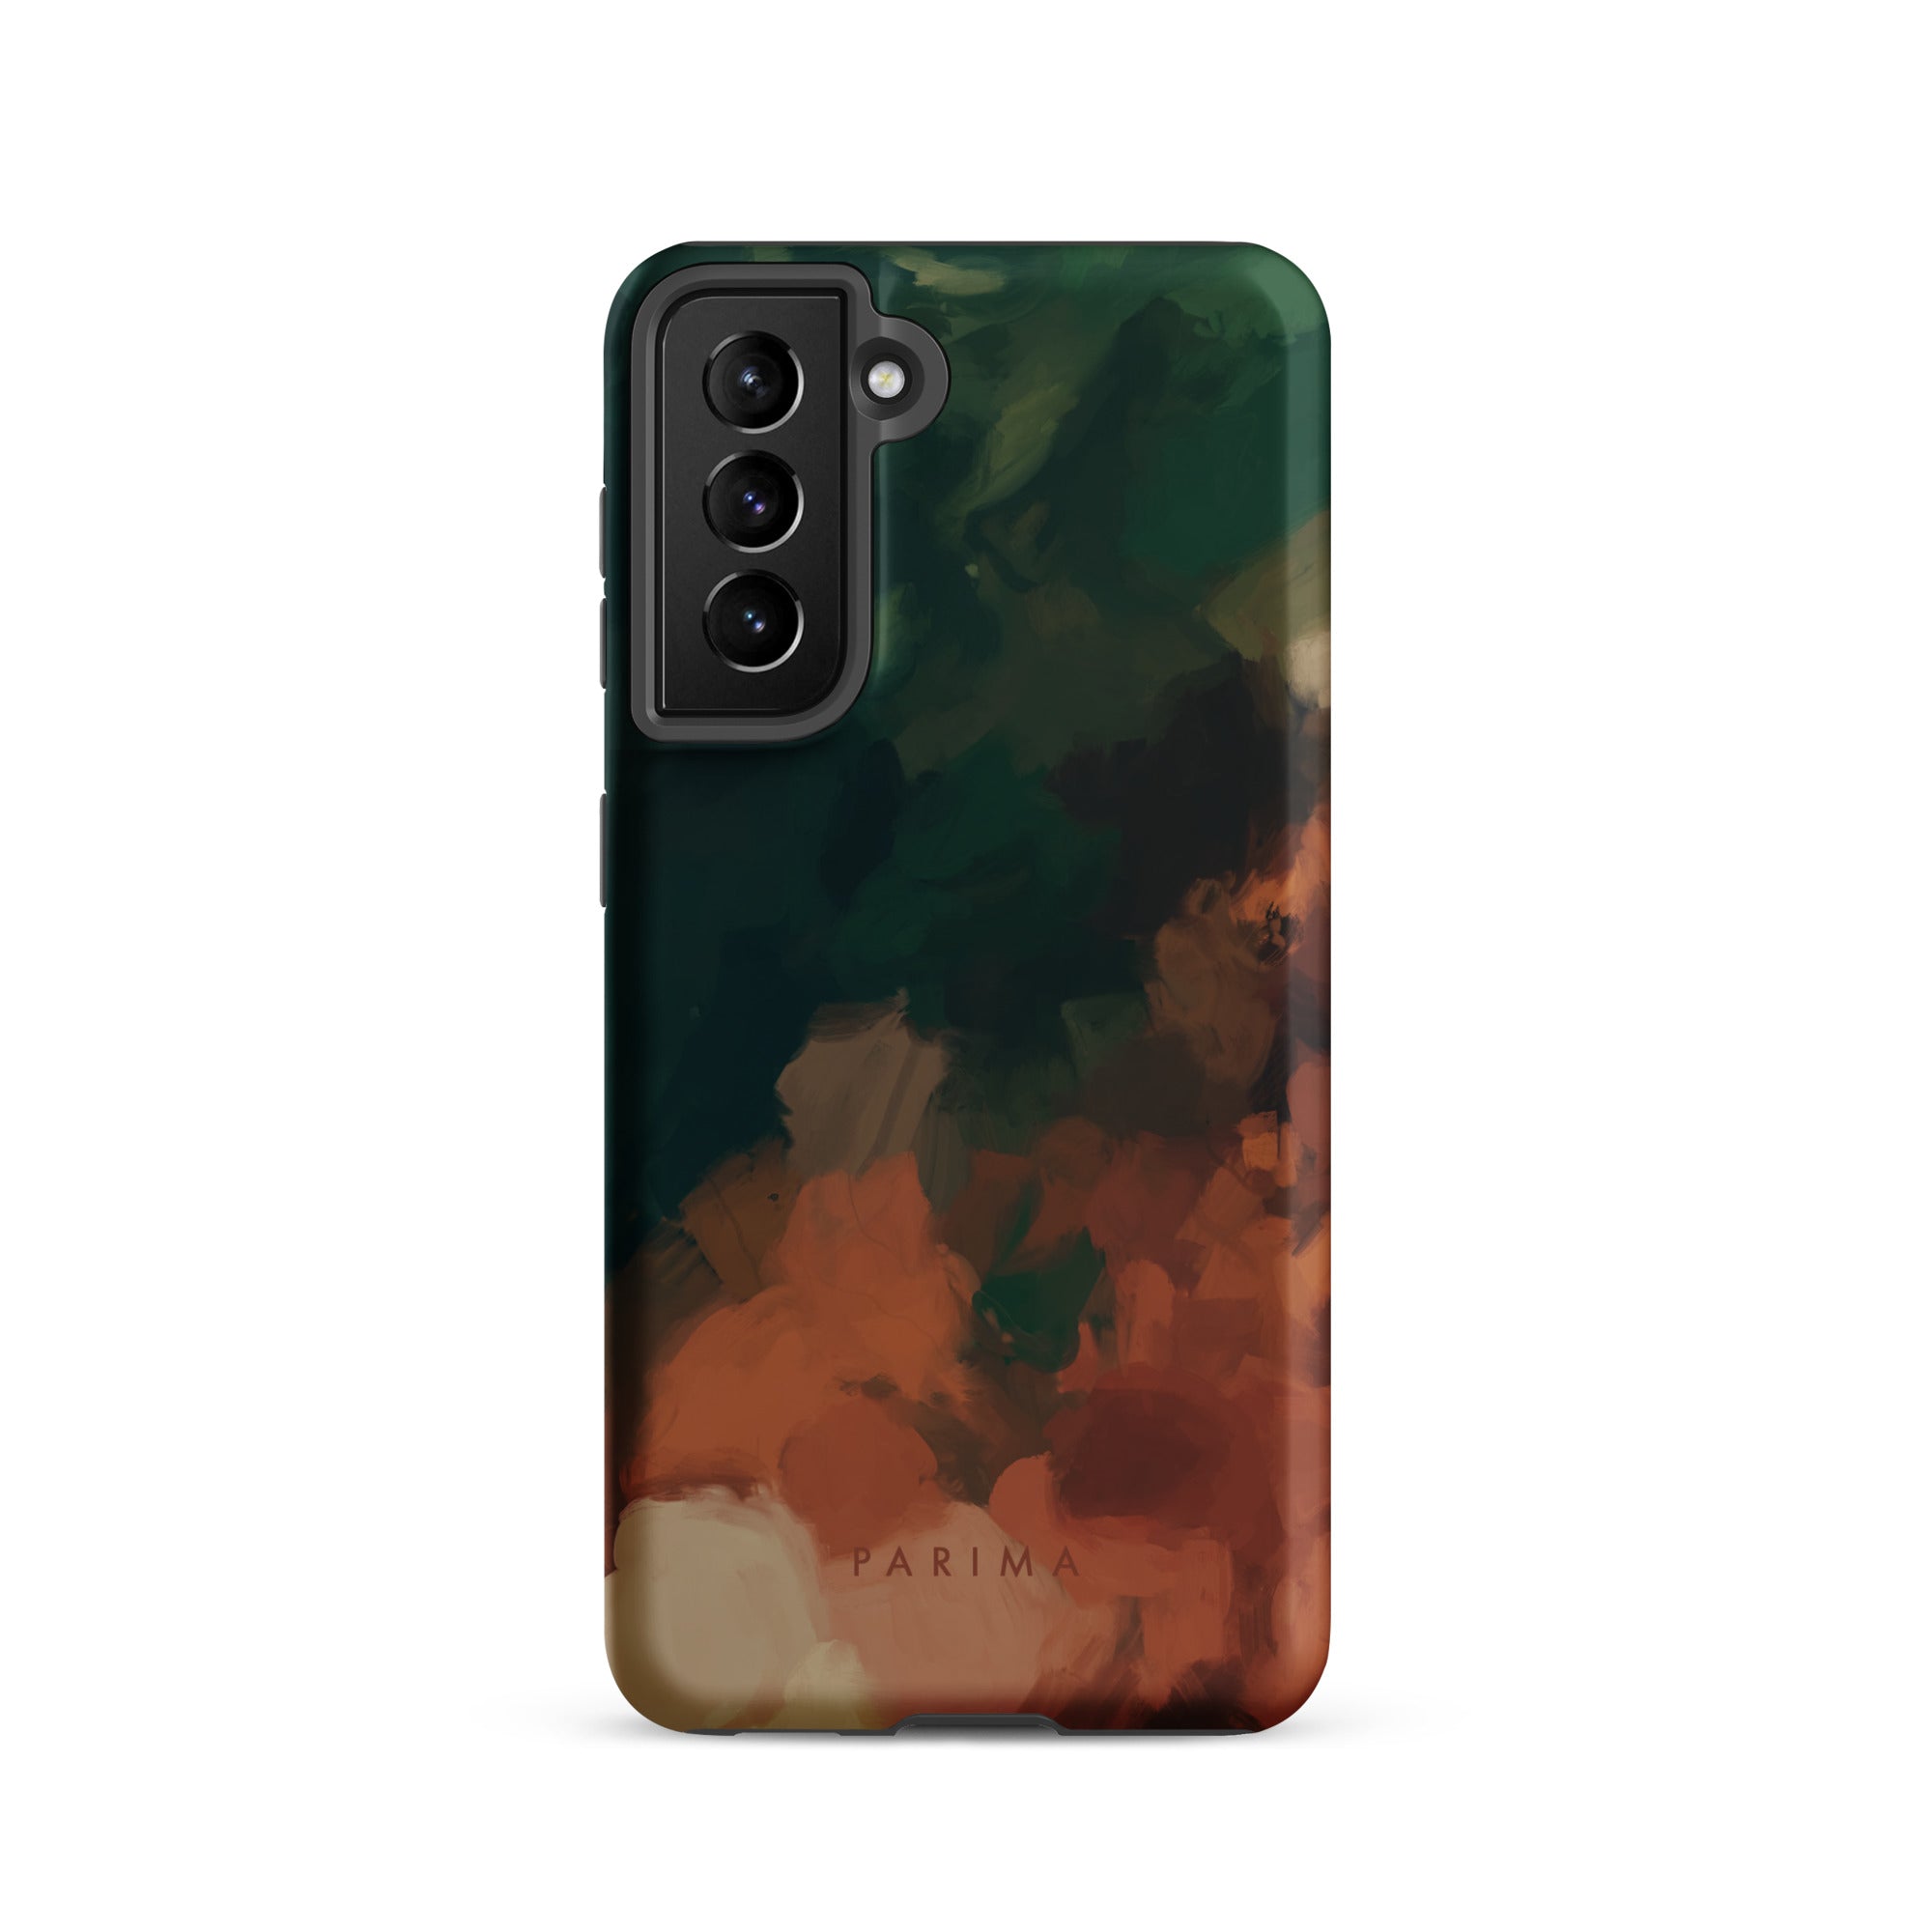 Cedar, green and brown abstract art on Samsung Galaxy S21 tough case by Parima Studio